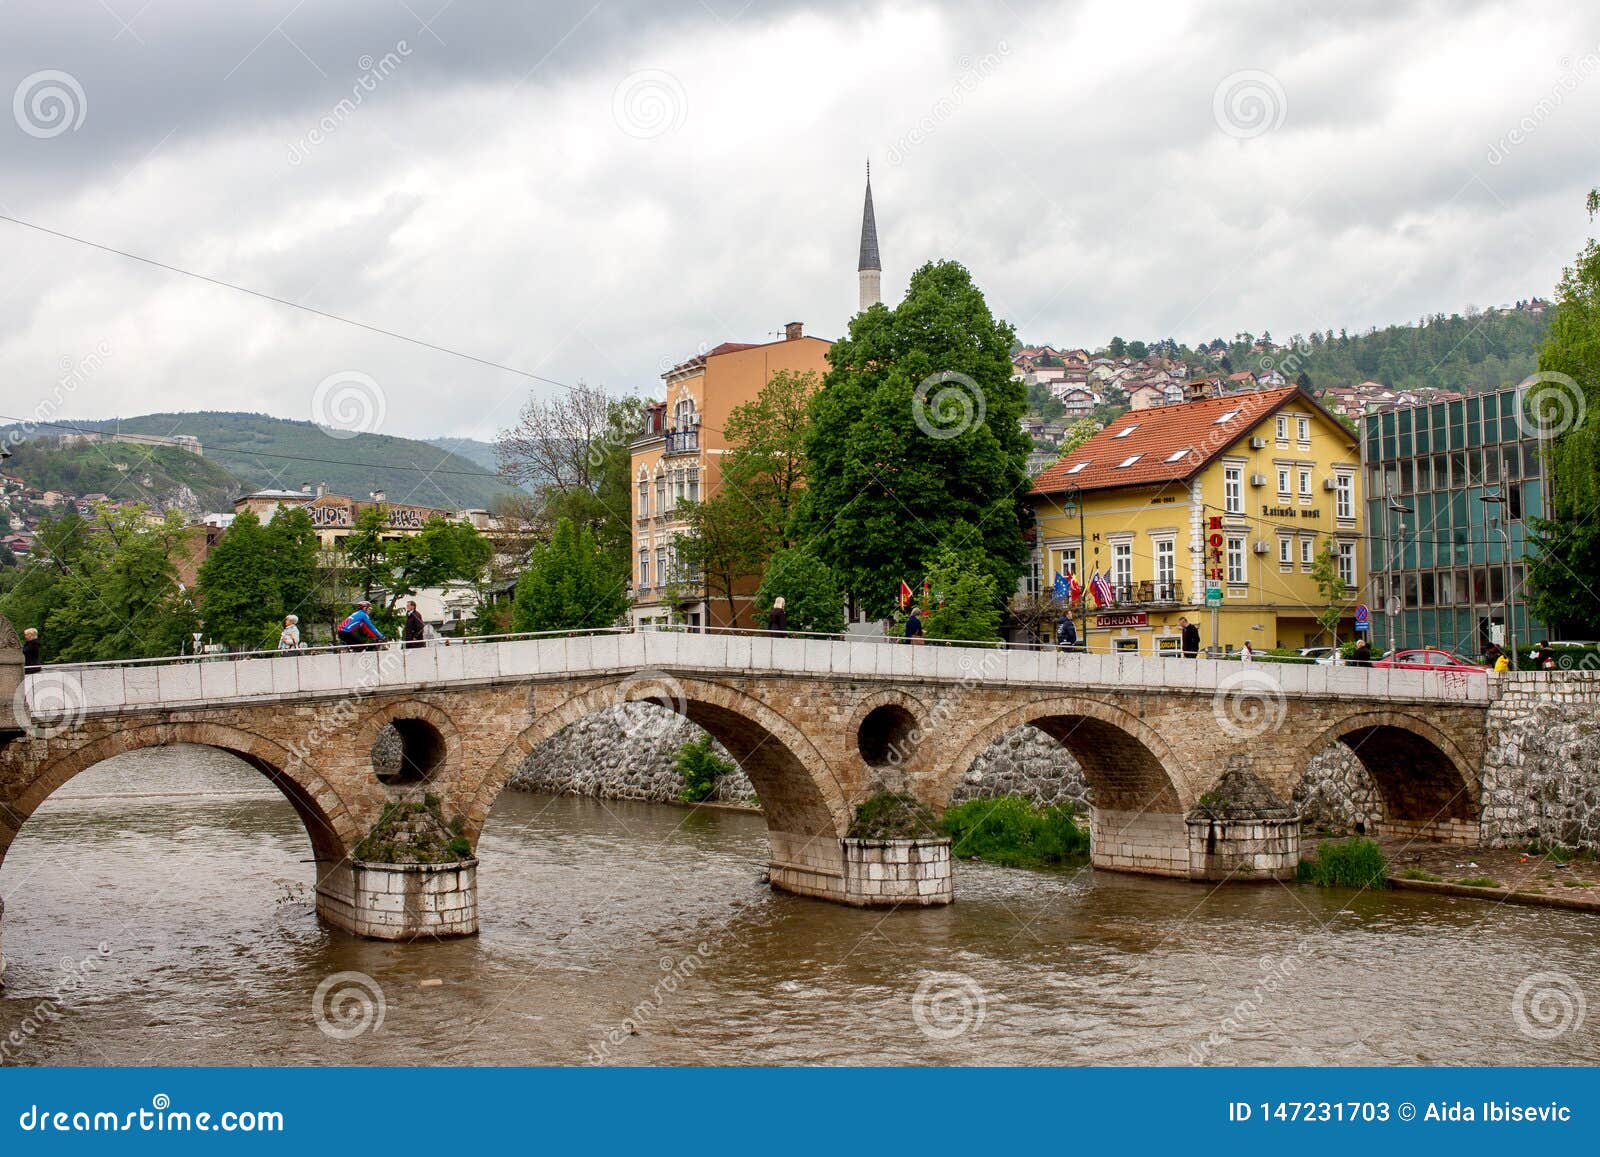 beautiful sarajevo latin bridge or princip bridge archduke`s assassination bridge